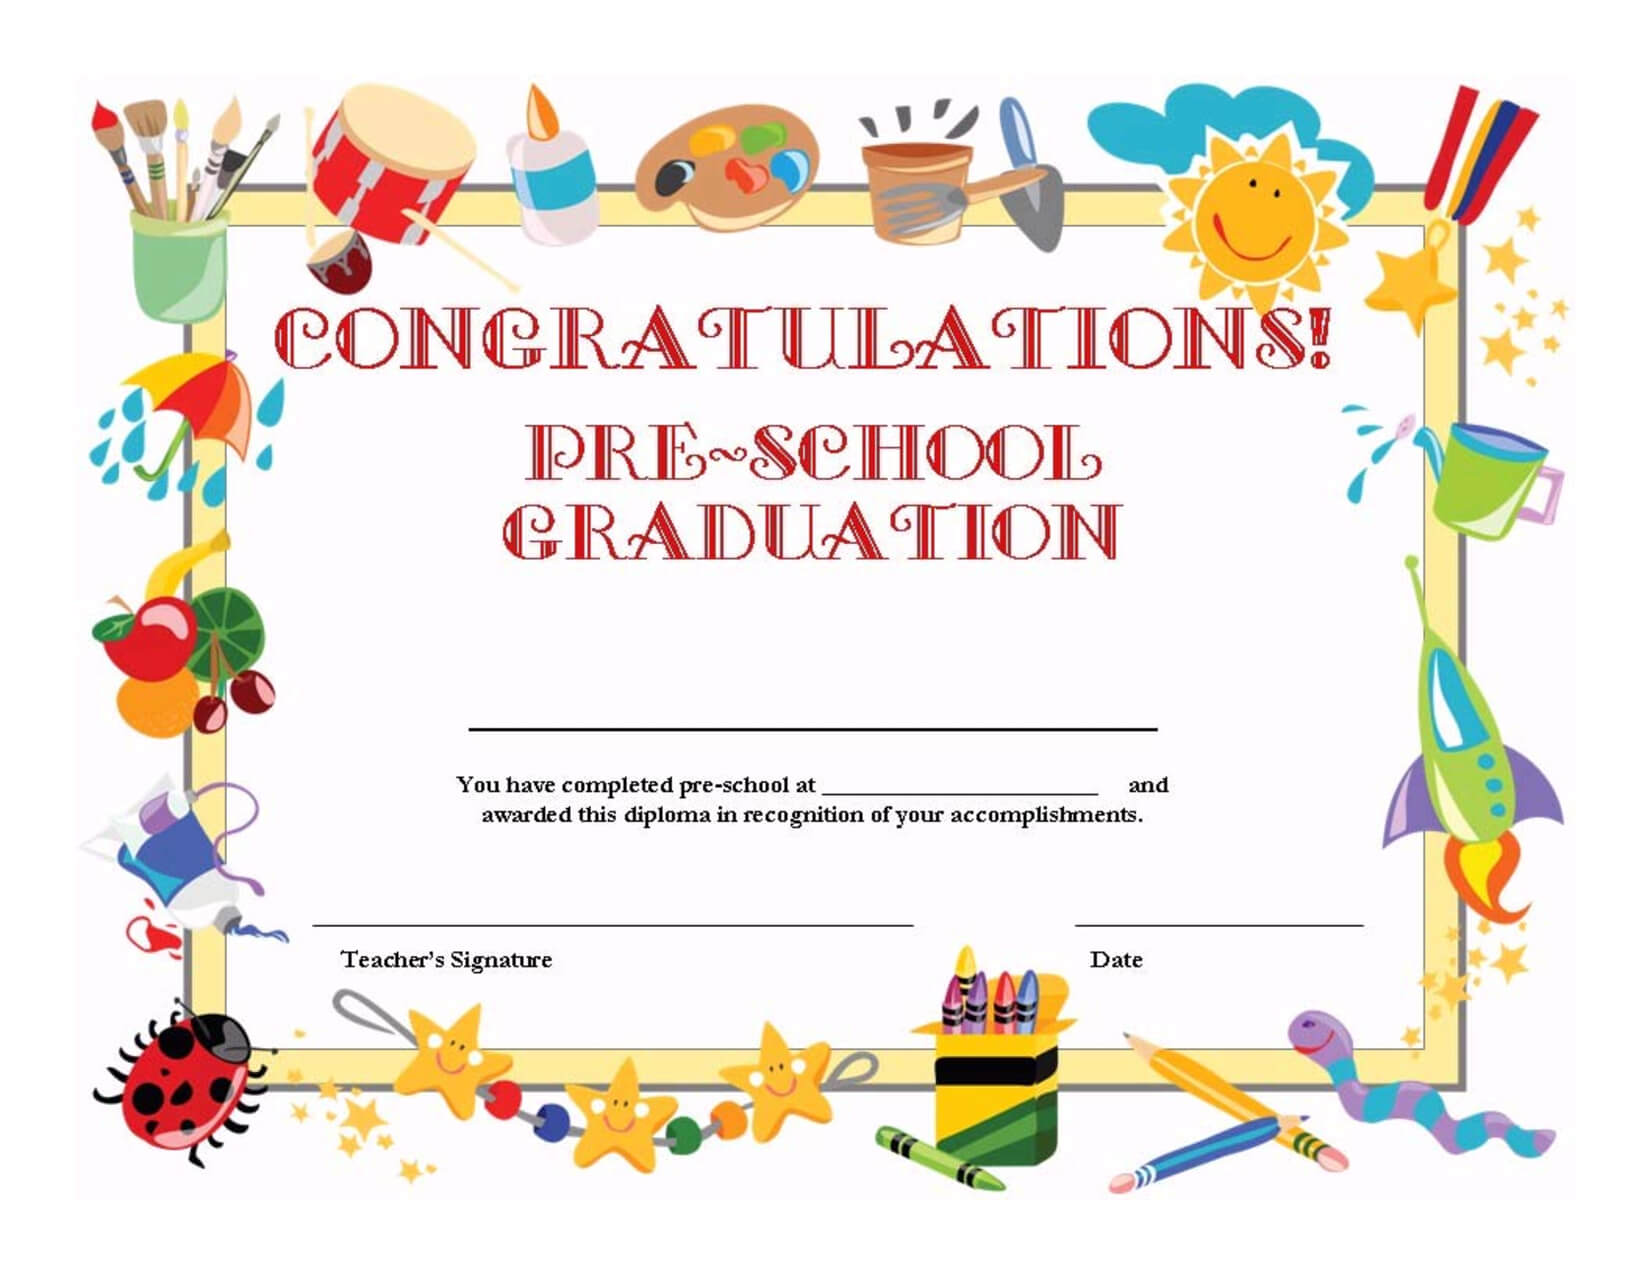 Preschool Graduation Certificate Template Free | Graduation With School Certificate Templates Free